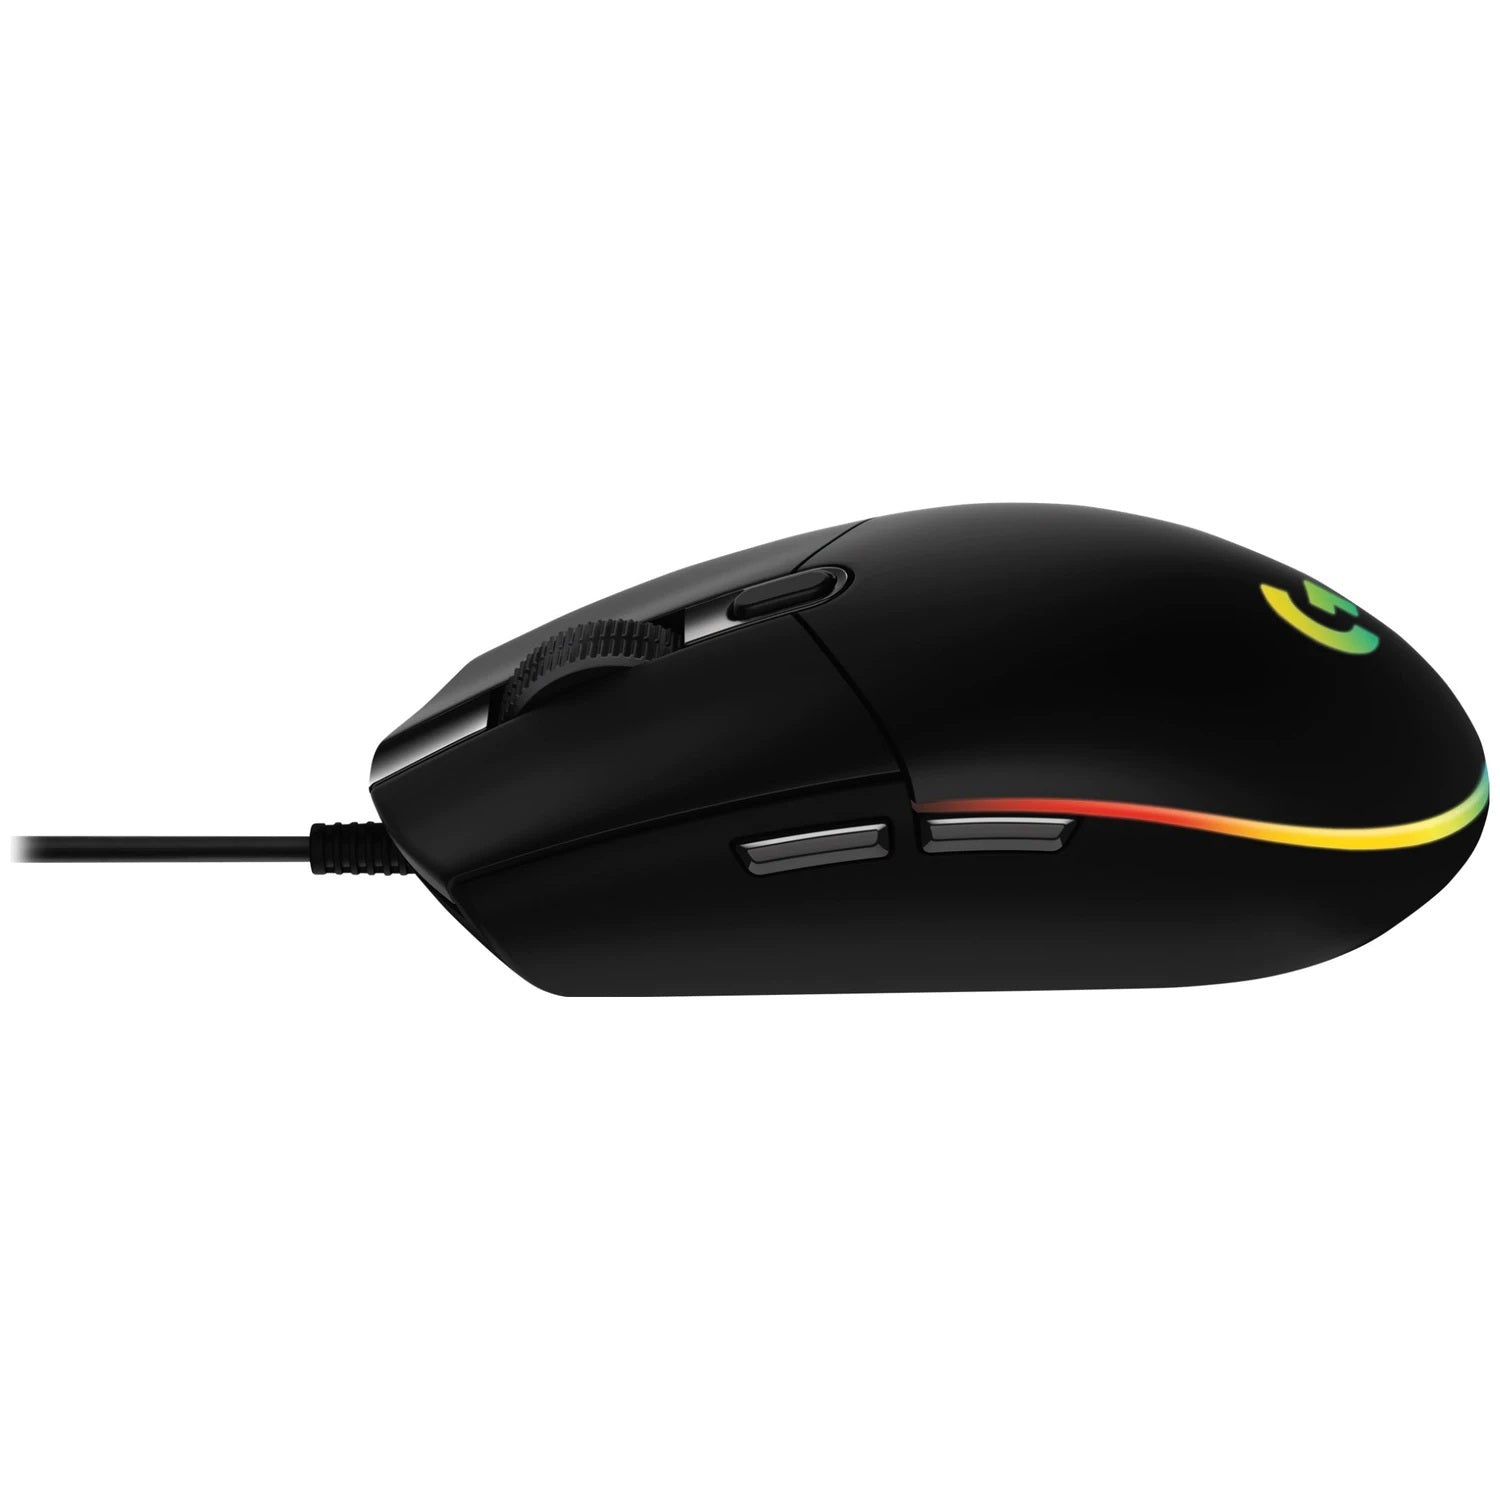 Logitech G203 LIGHTSYNC RGB Gaming Mouse (Black) - PC Games